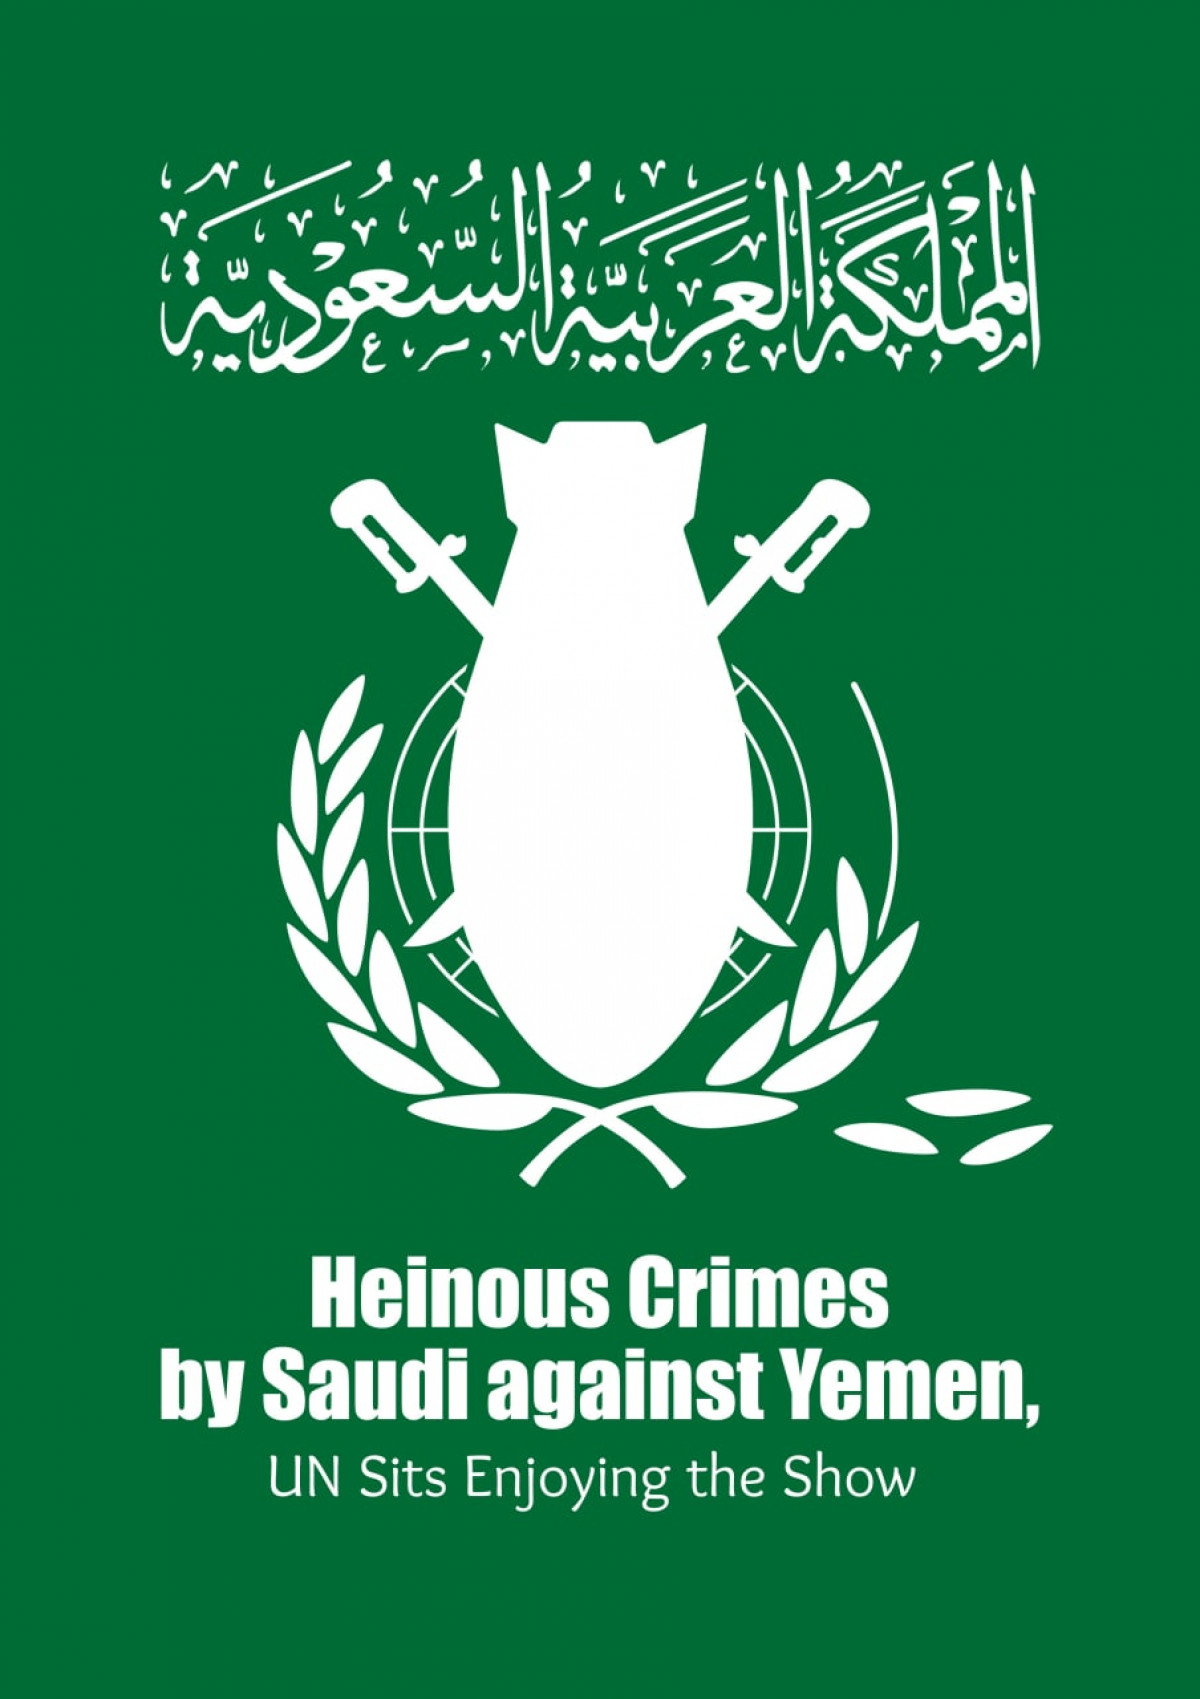 Heinous crimes by Saudi against Yemen UN sits enjoying the show.